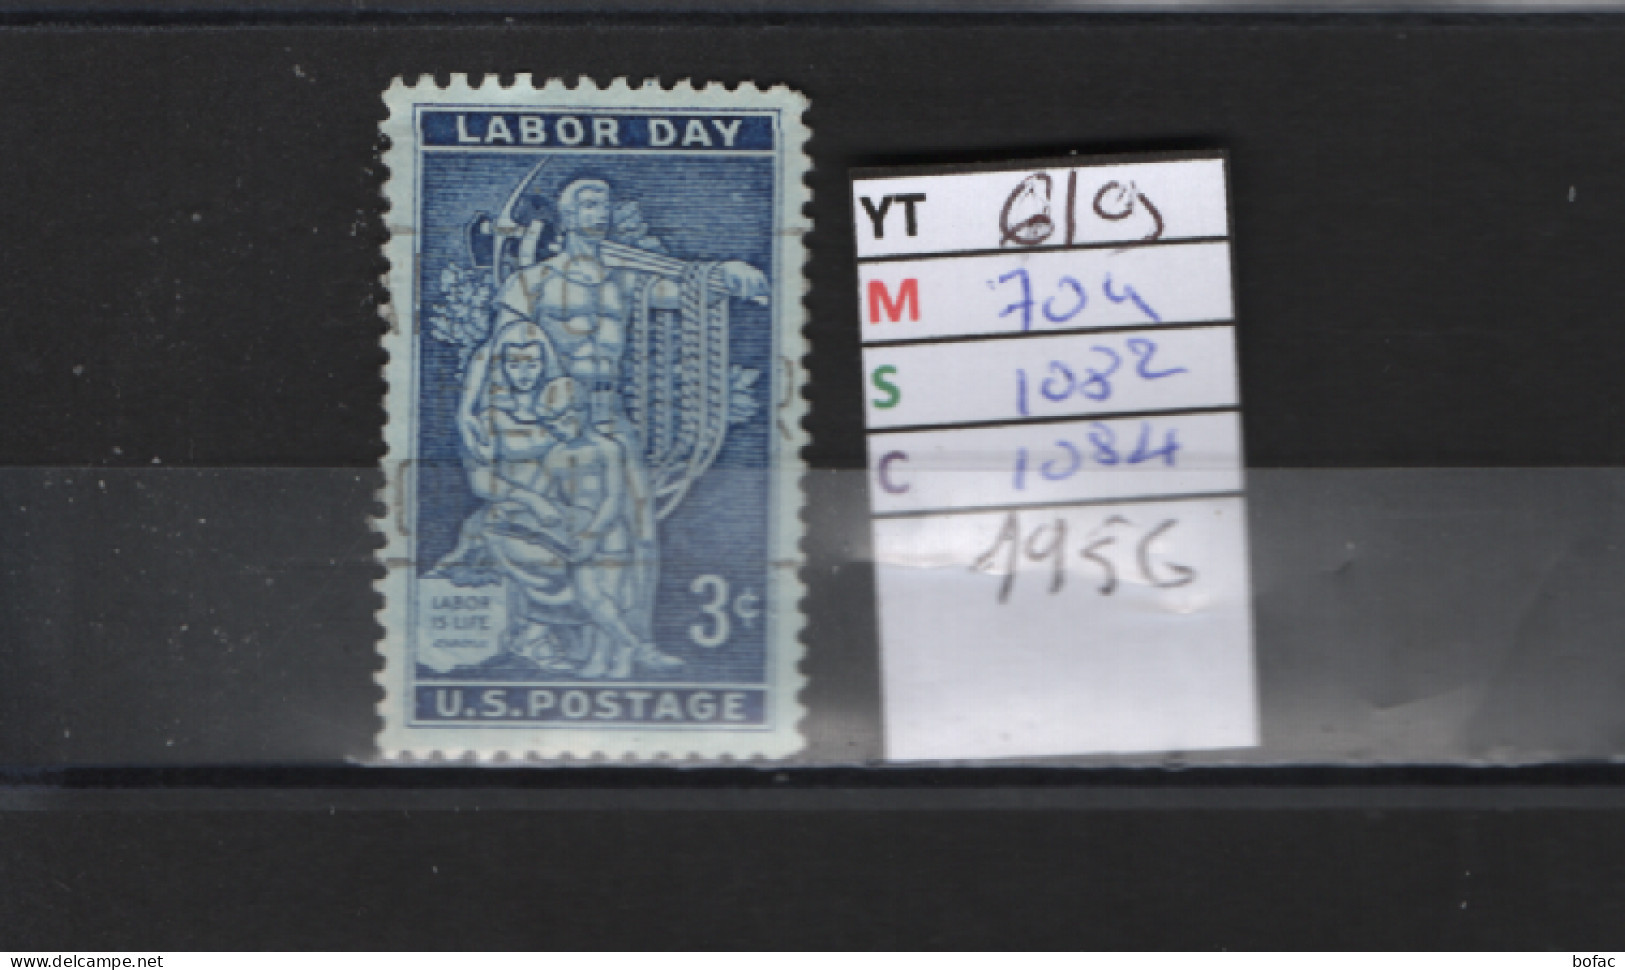 PRIX FIXE Obl  619 YT 704 MIC 1082  SCO 1084 GIB Journée Du Travail Labor Day 1956 Etats Unis  58A/07 - Used Stamps